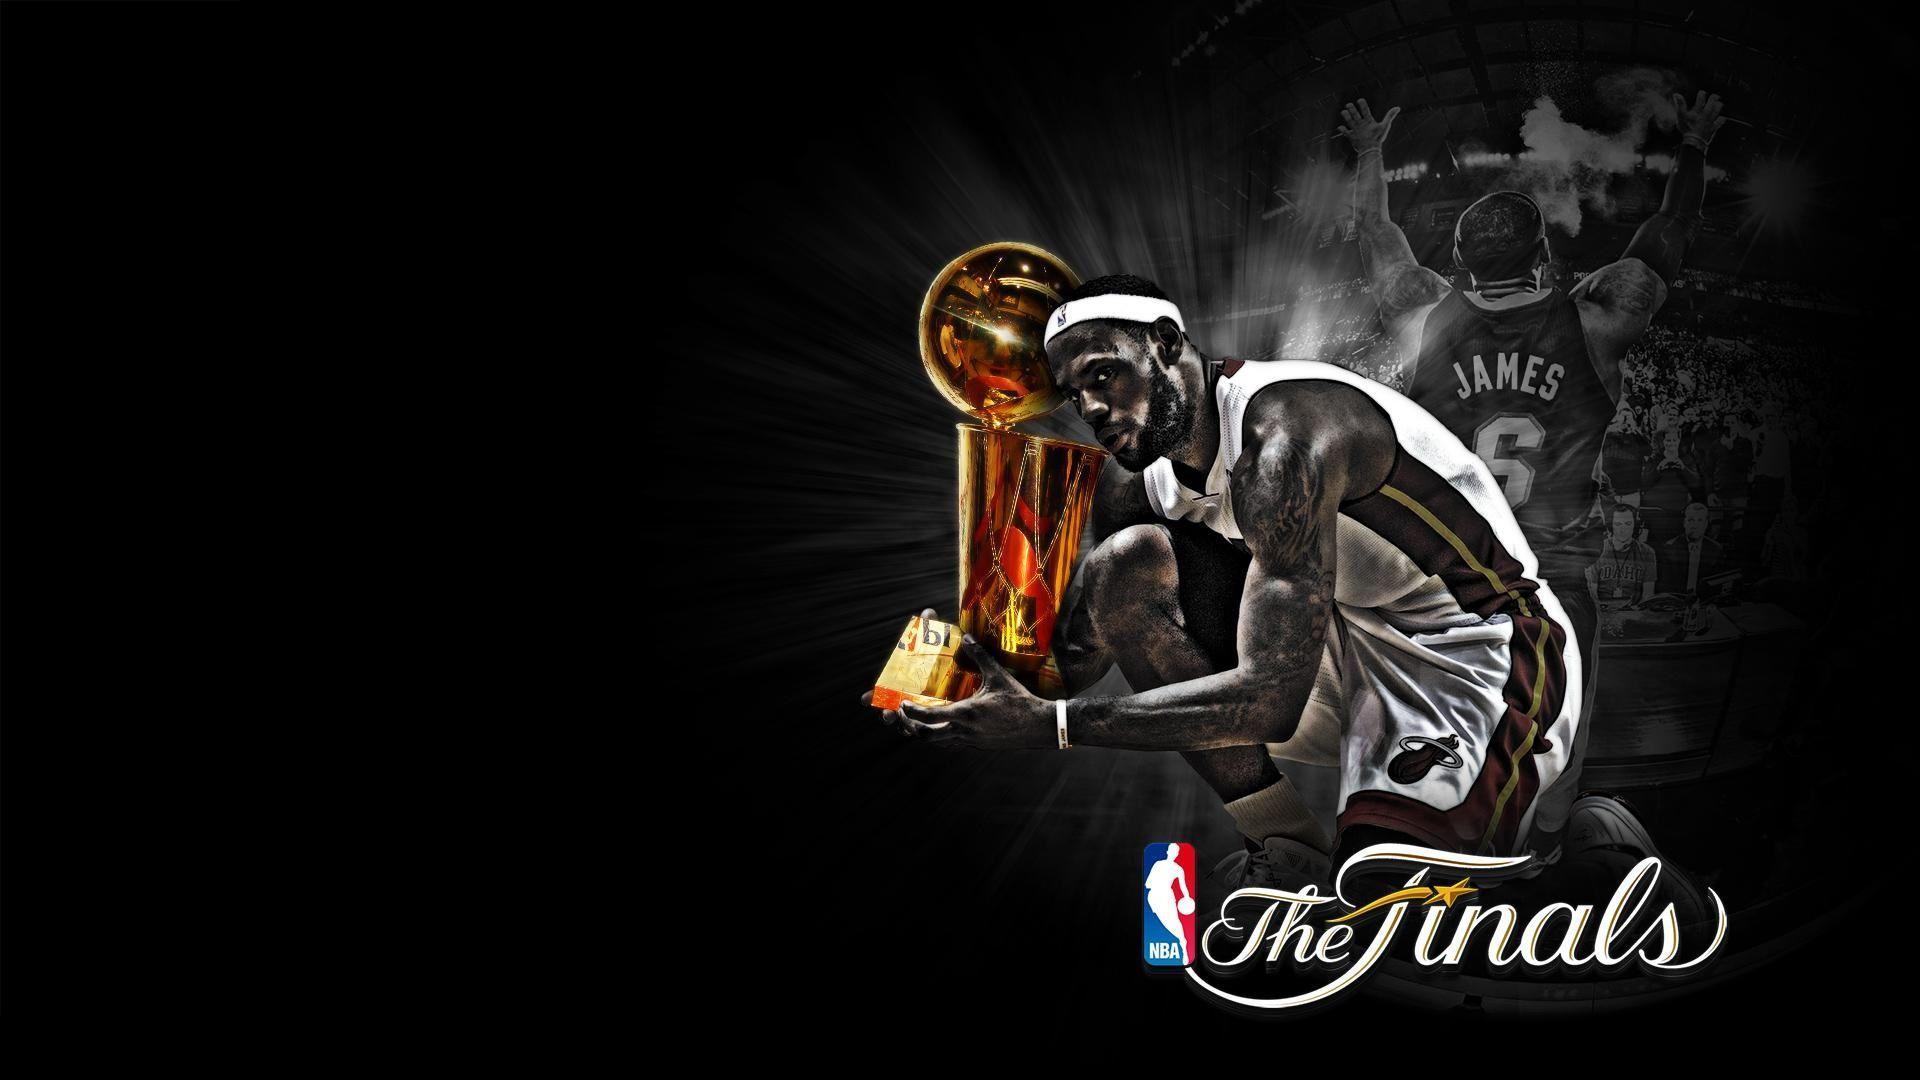 HD NBA Finals 2012 Miami Heat Wallpaper Free Download Lovely